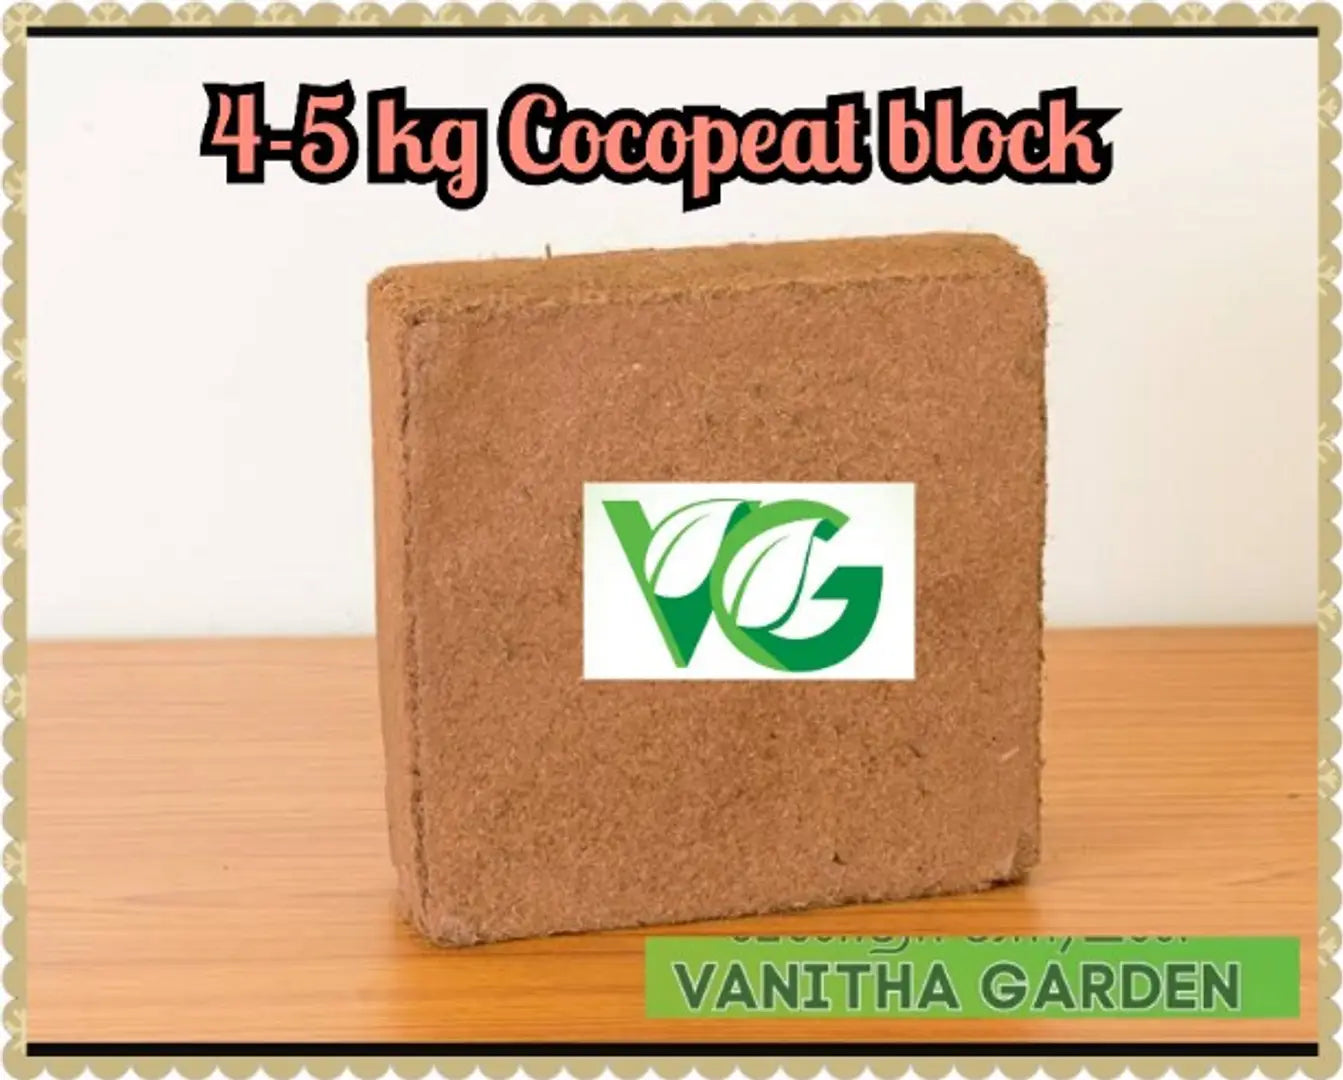 Cocopeat 4-5 kg block